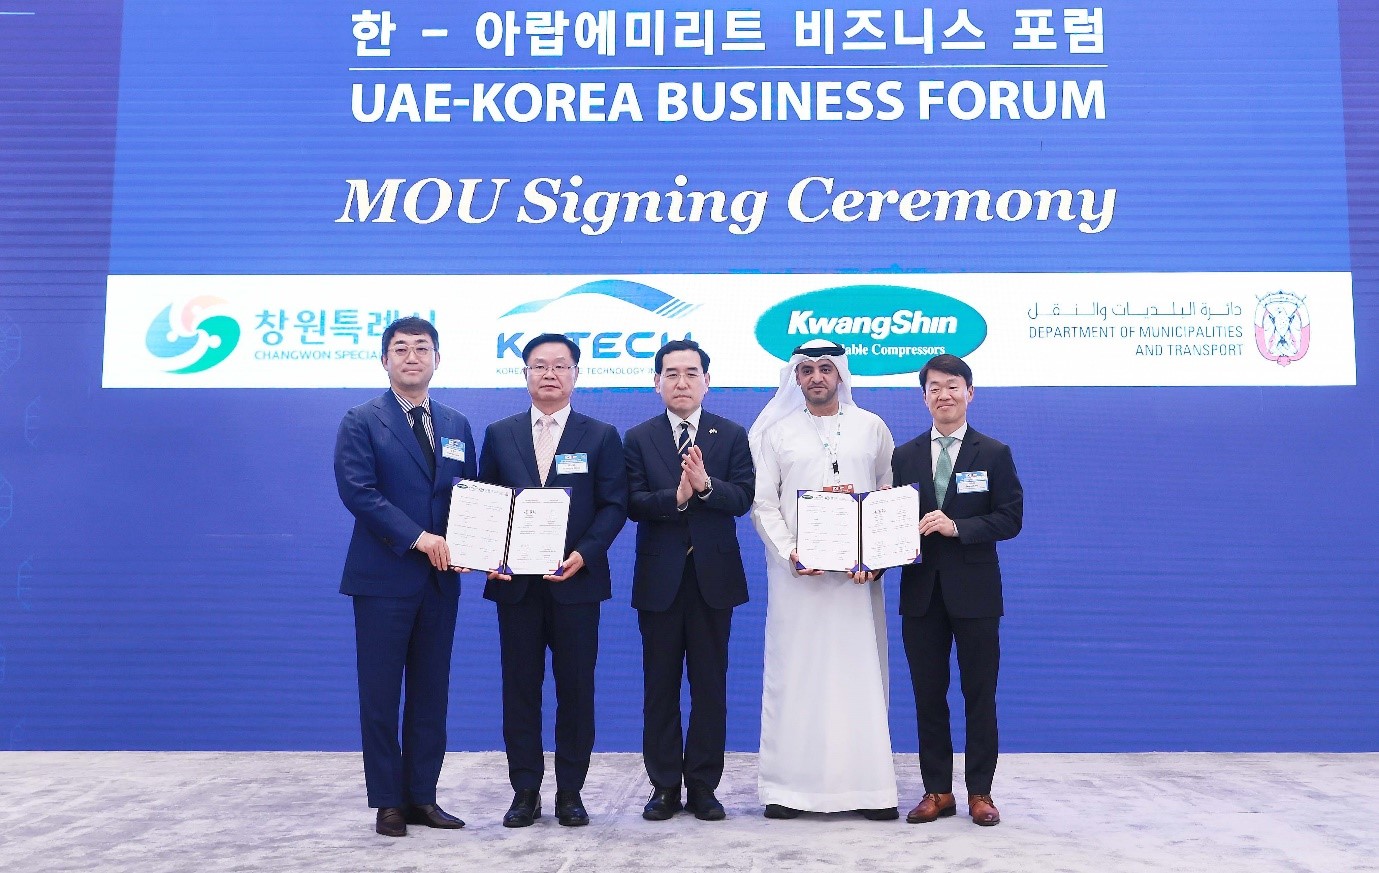 Minister attends Korea-UAE Business Forum Image 0